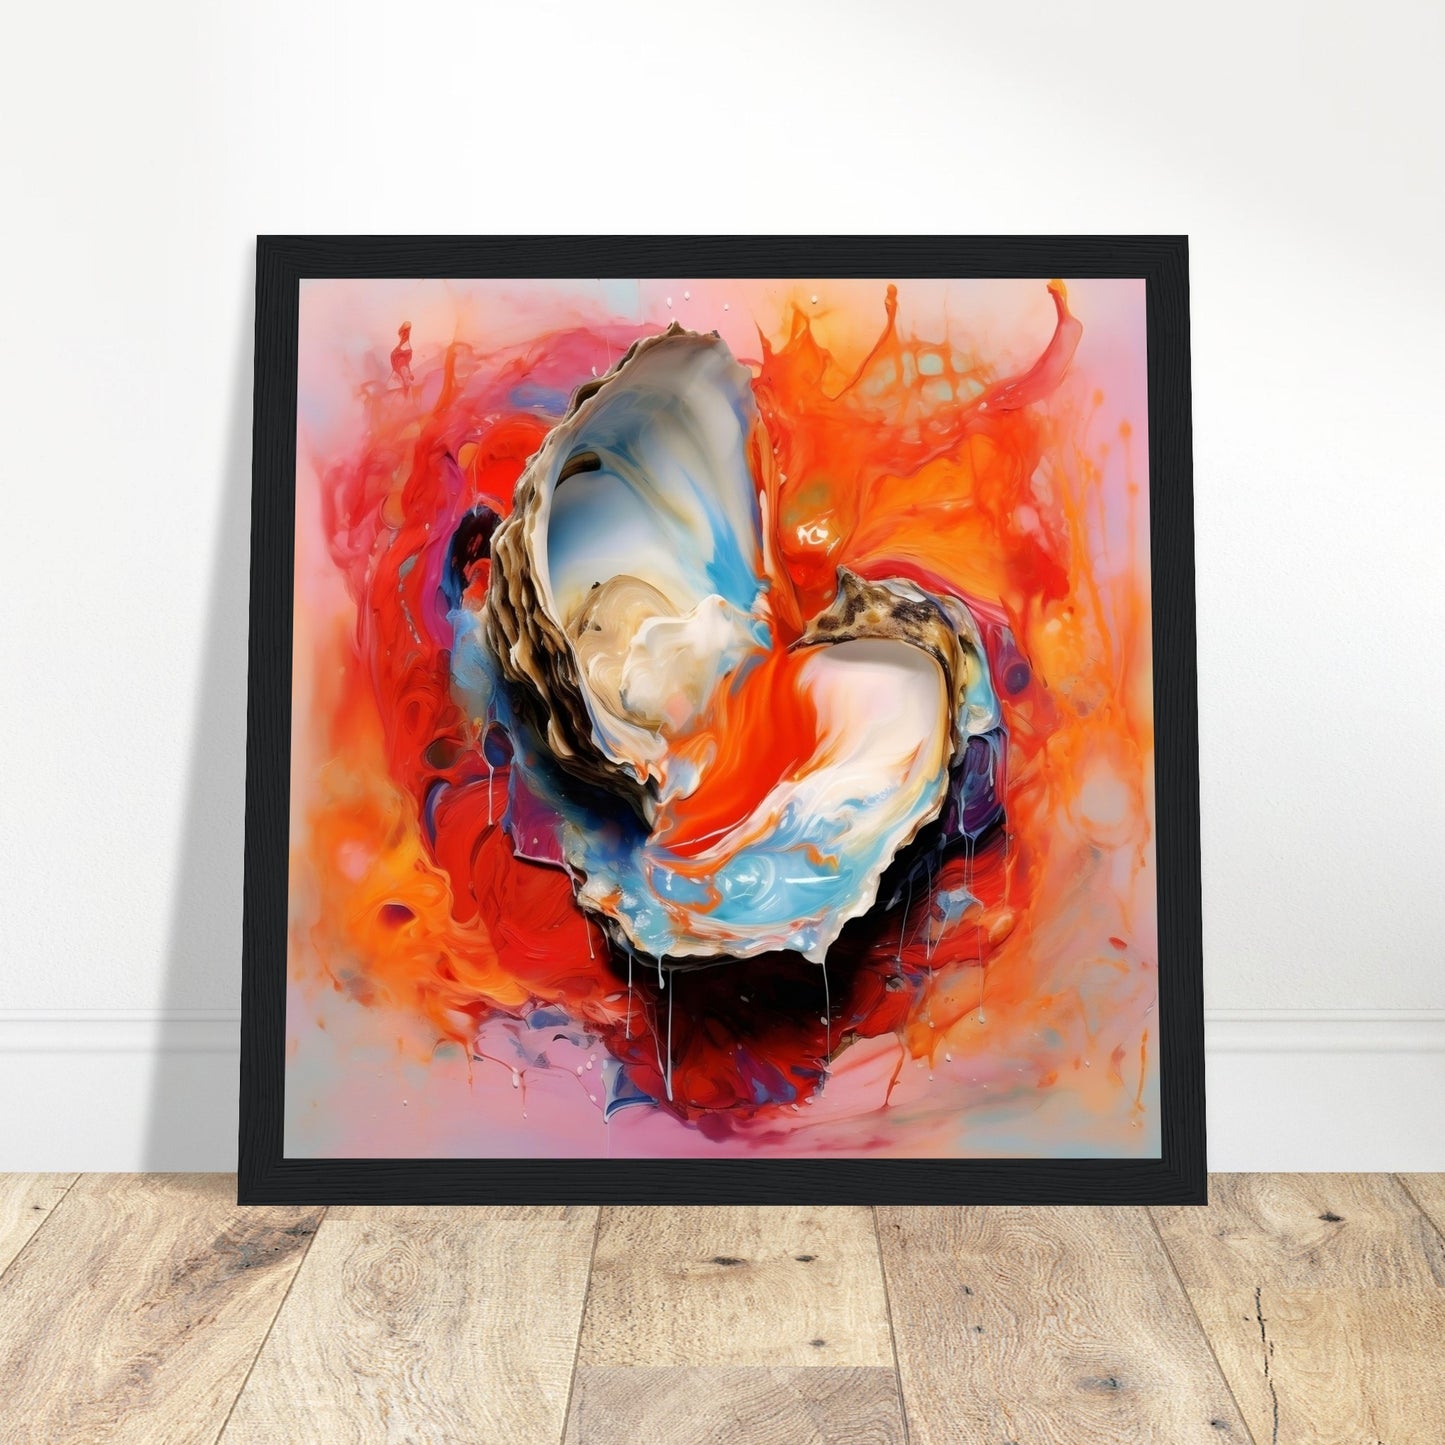 Exclusive Oyster Sea Artwork #5 - Print Room Ltd Black frame 50x50 cm / 20x20"